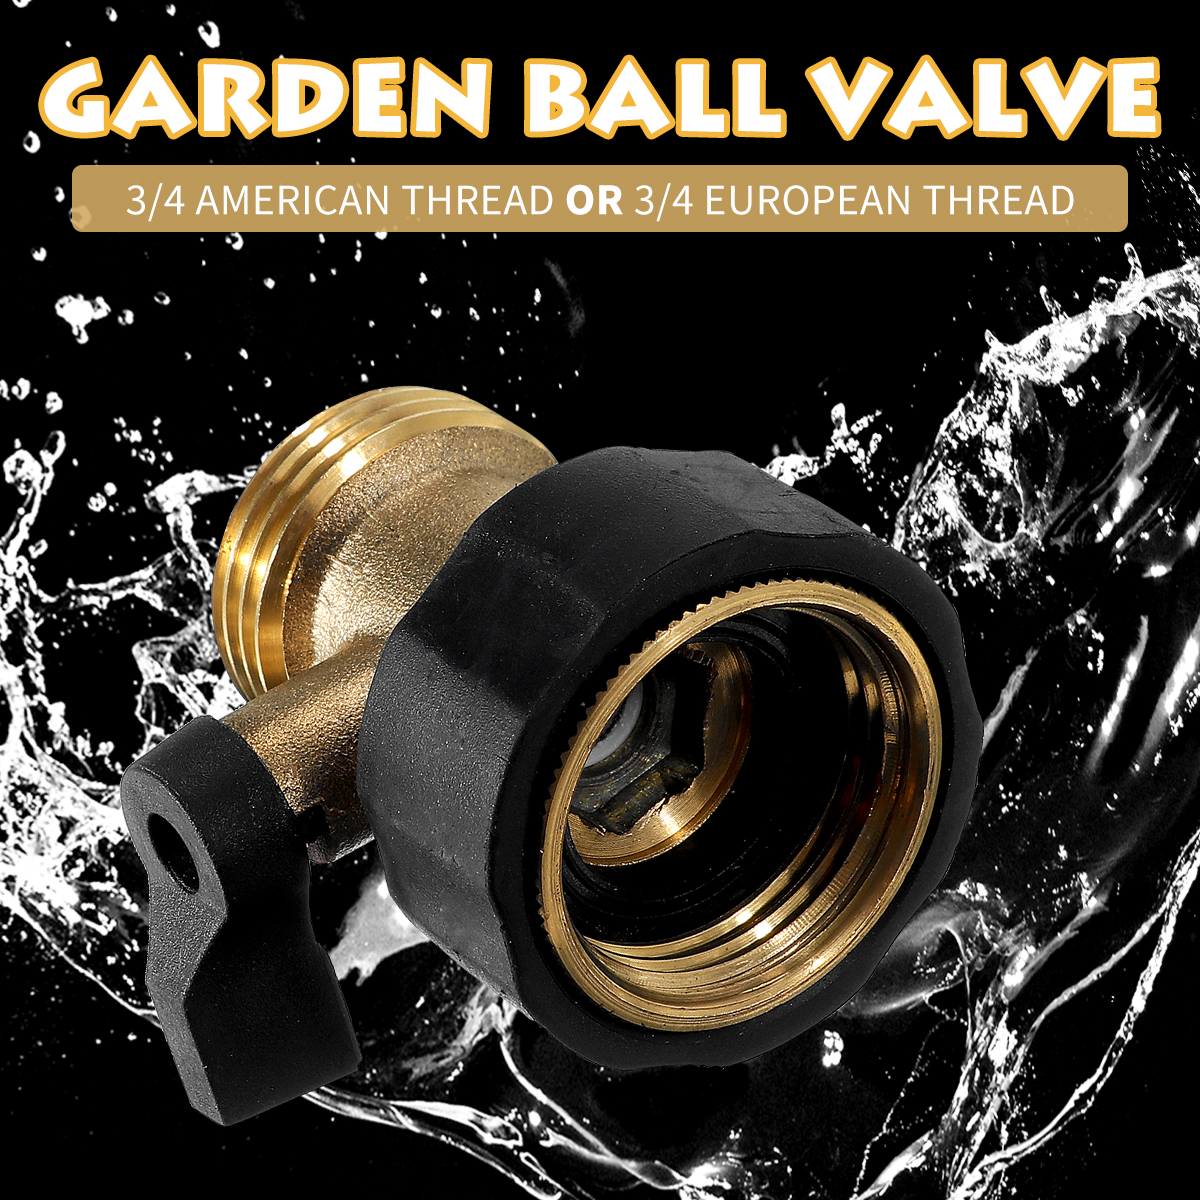 American--European-Thread-Single-pass-Ball-Valve-34-Import-and-Export-Threaded-Ball-Valve-1614426-1